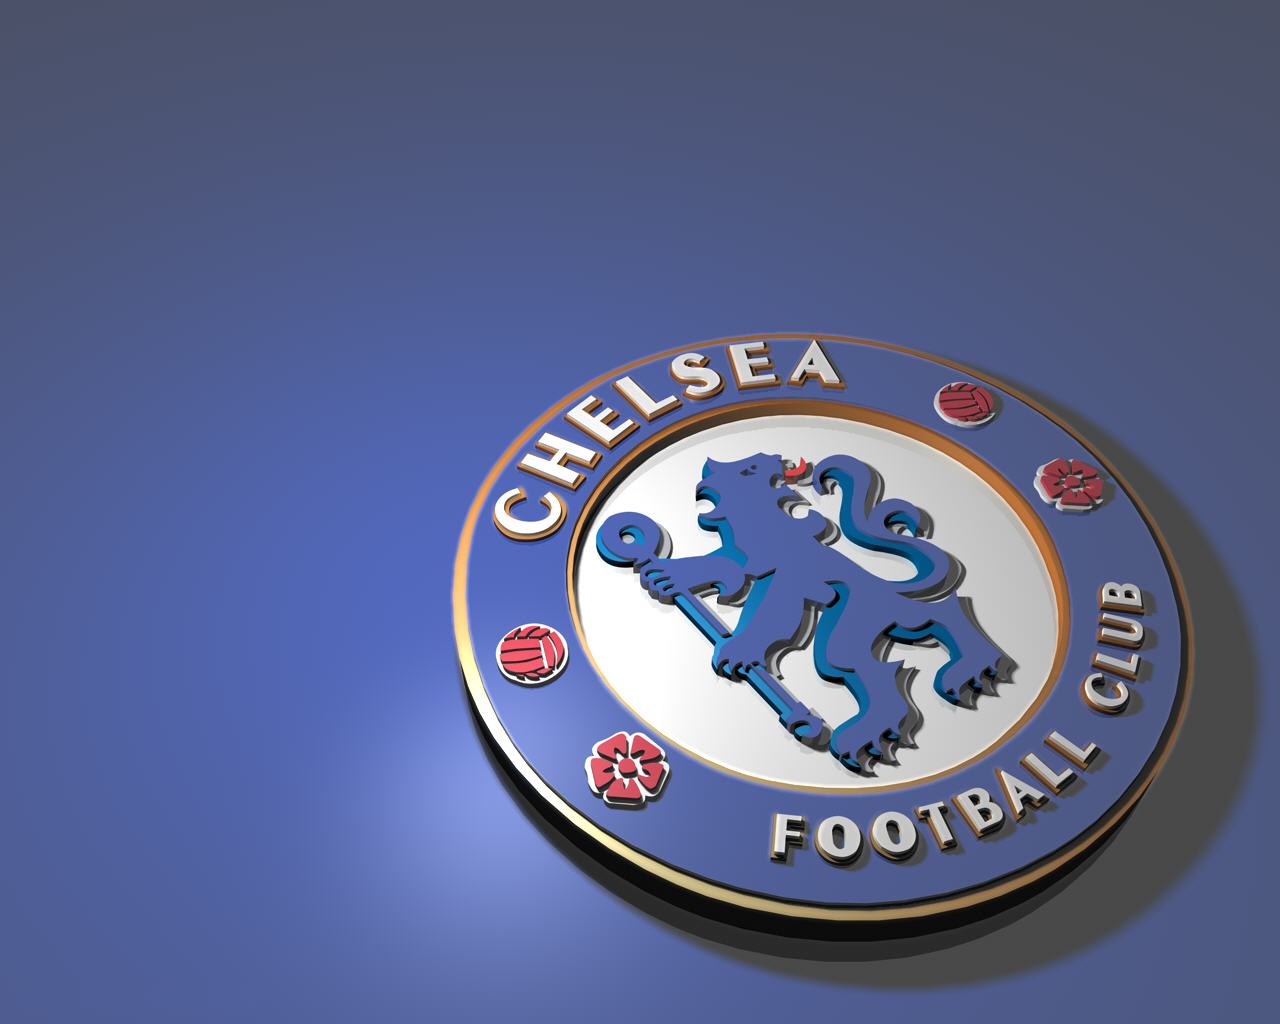 1001 WALLPAPER: Logo Chelsea F.C. (Chelsea Football Club) The Blues, The Pensioners (London F.C.)